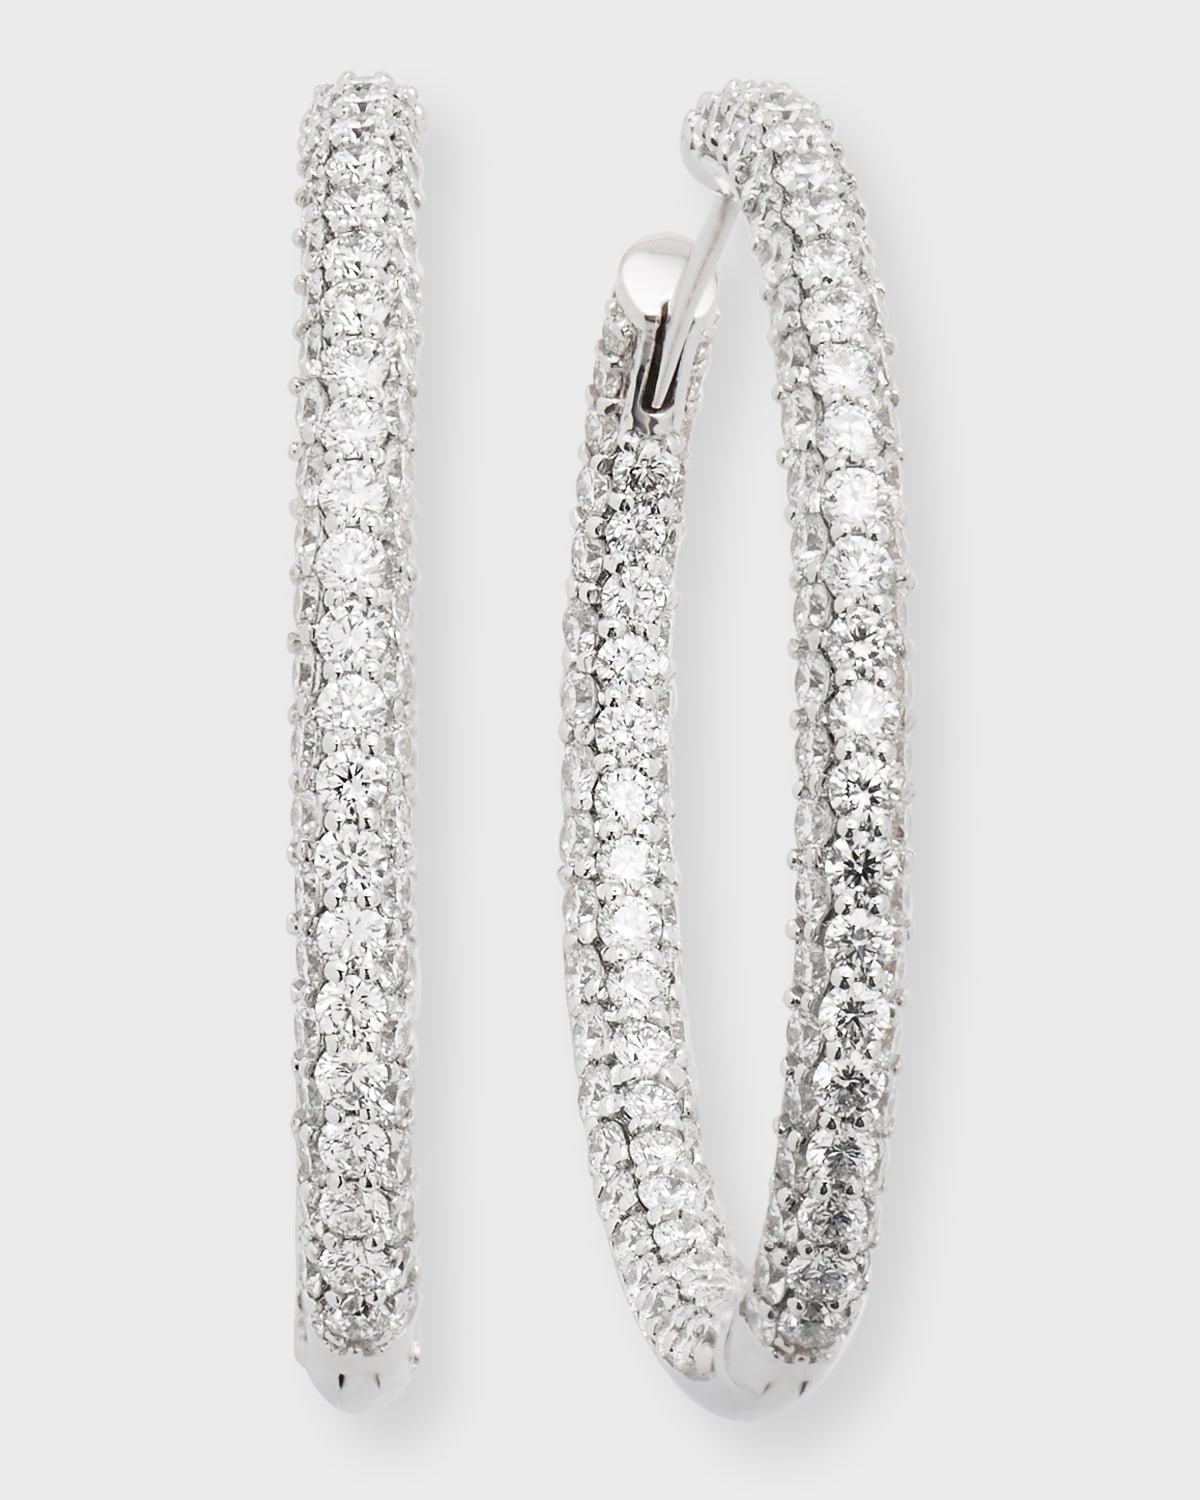 NM Diamond Collection Pave Diamond Hoop Earrings